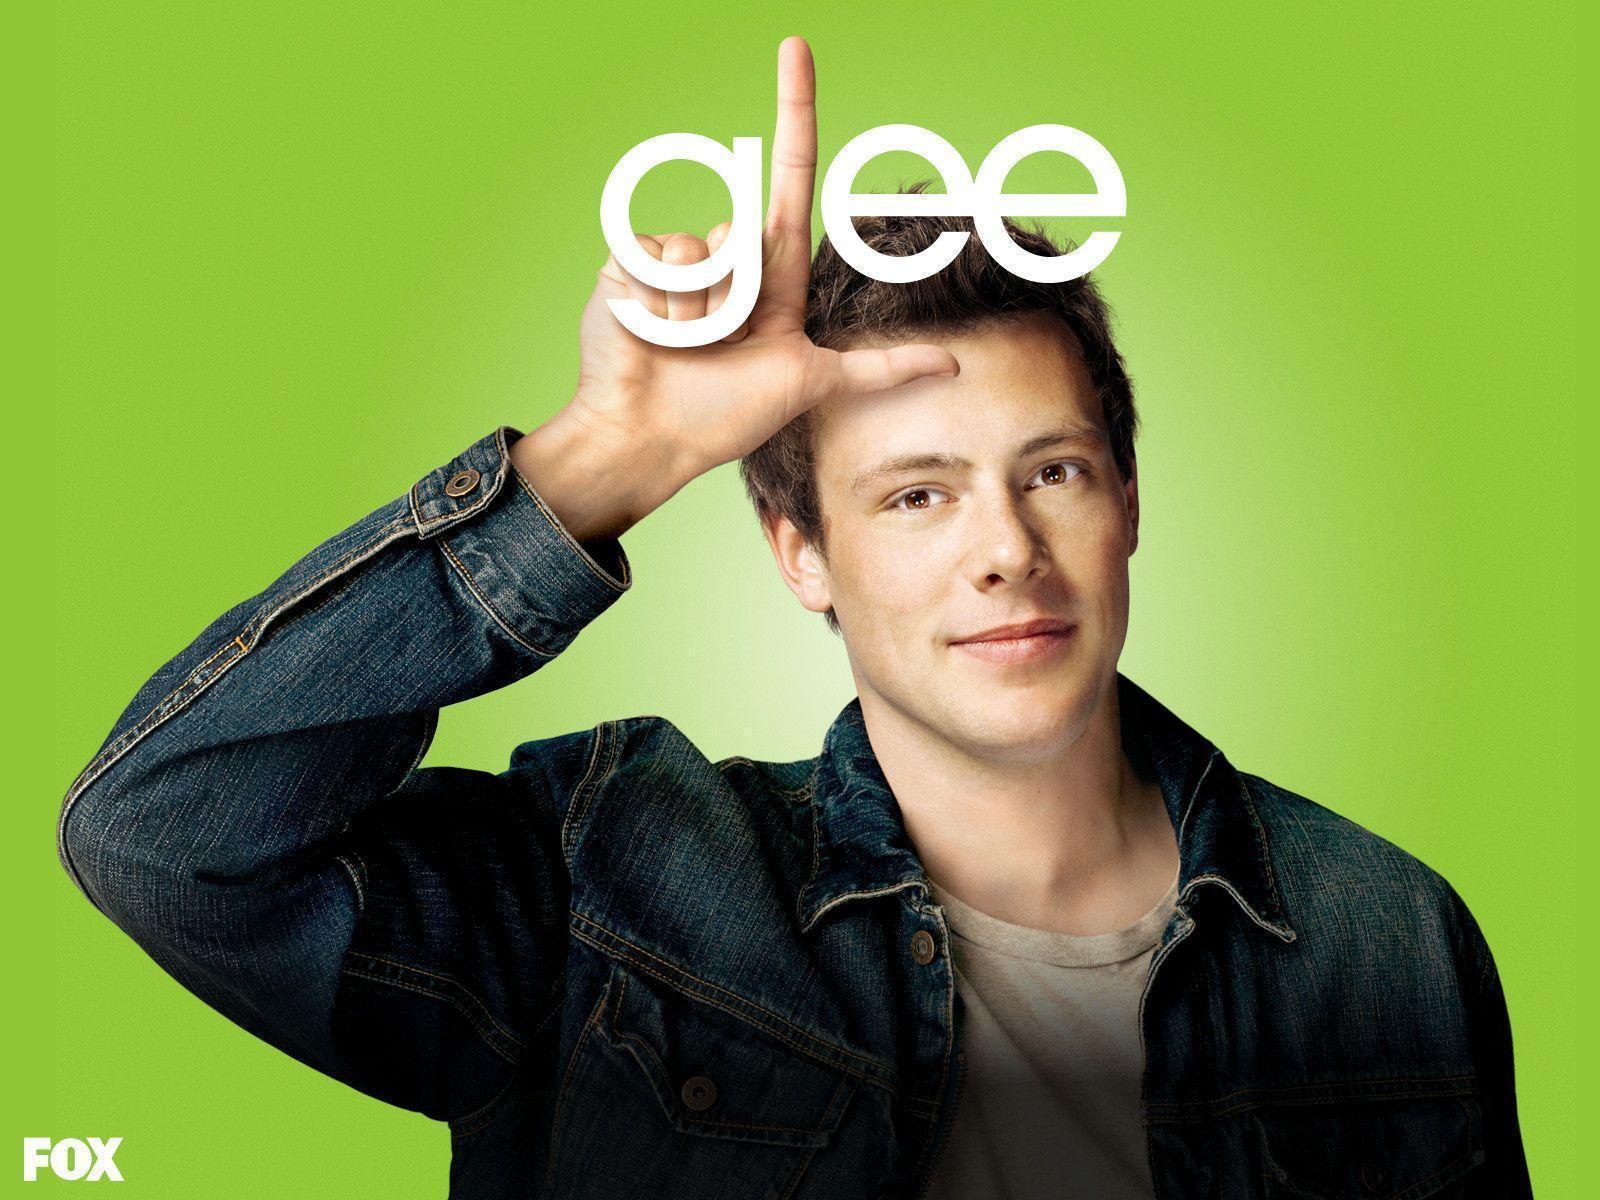 Photo 6 of Glee